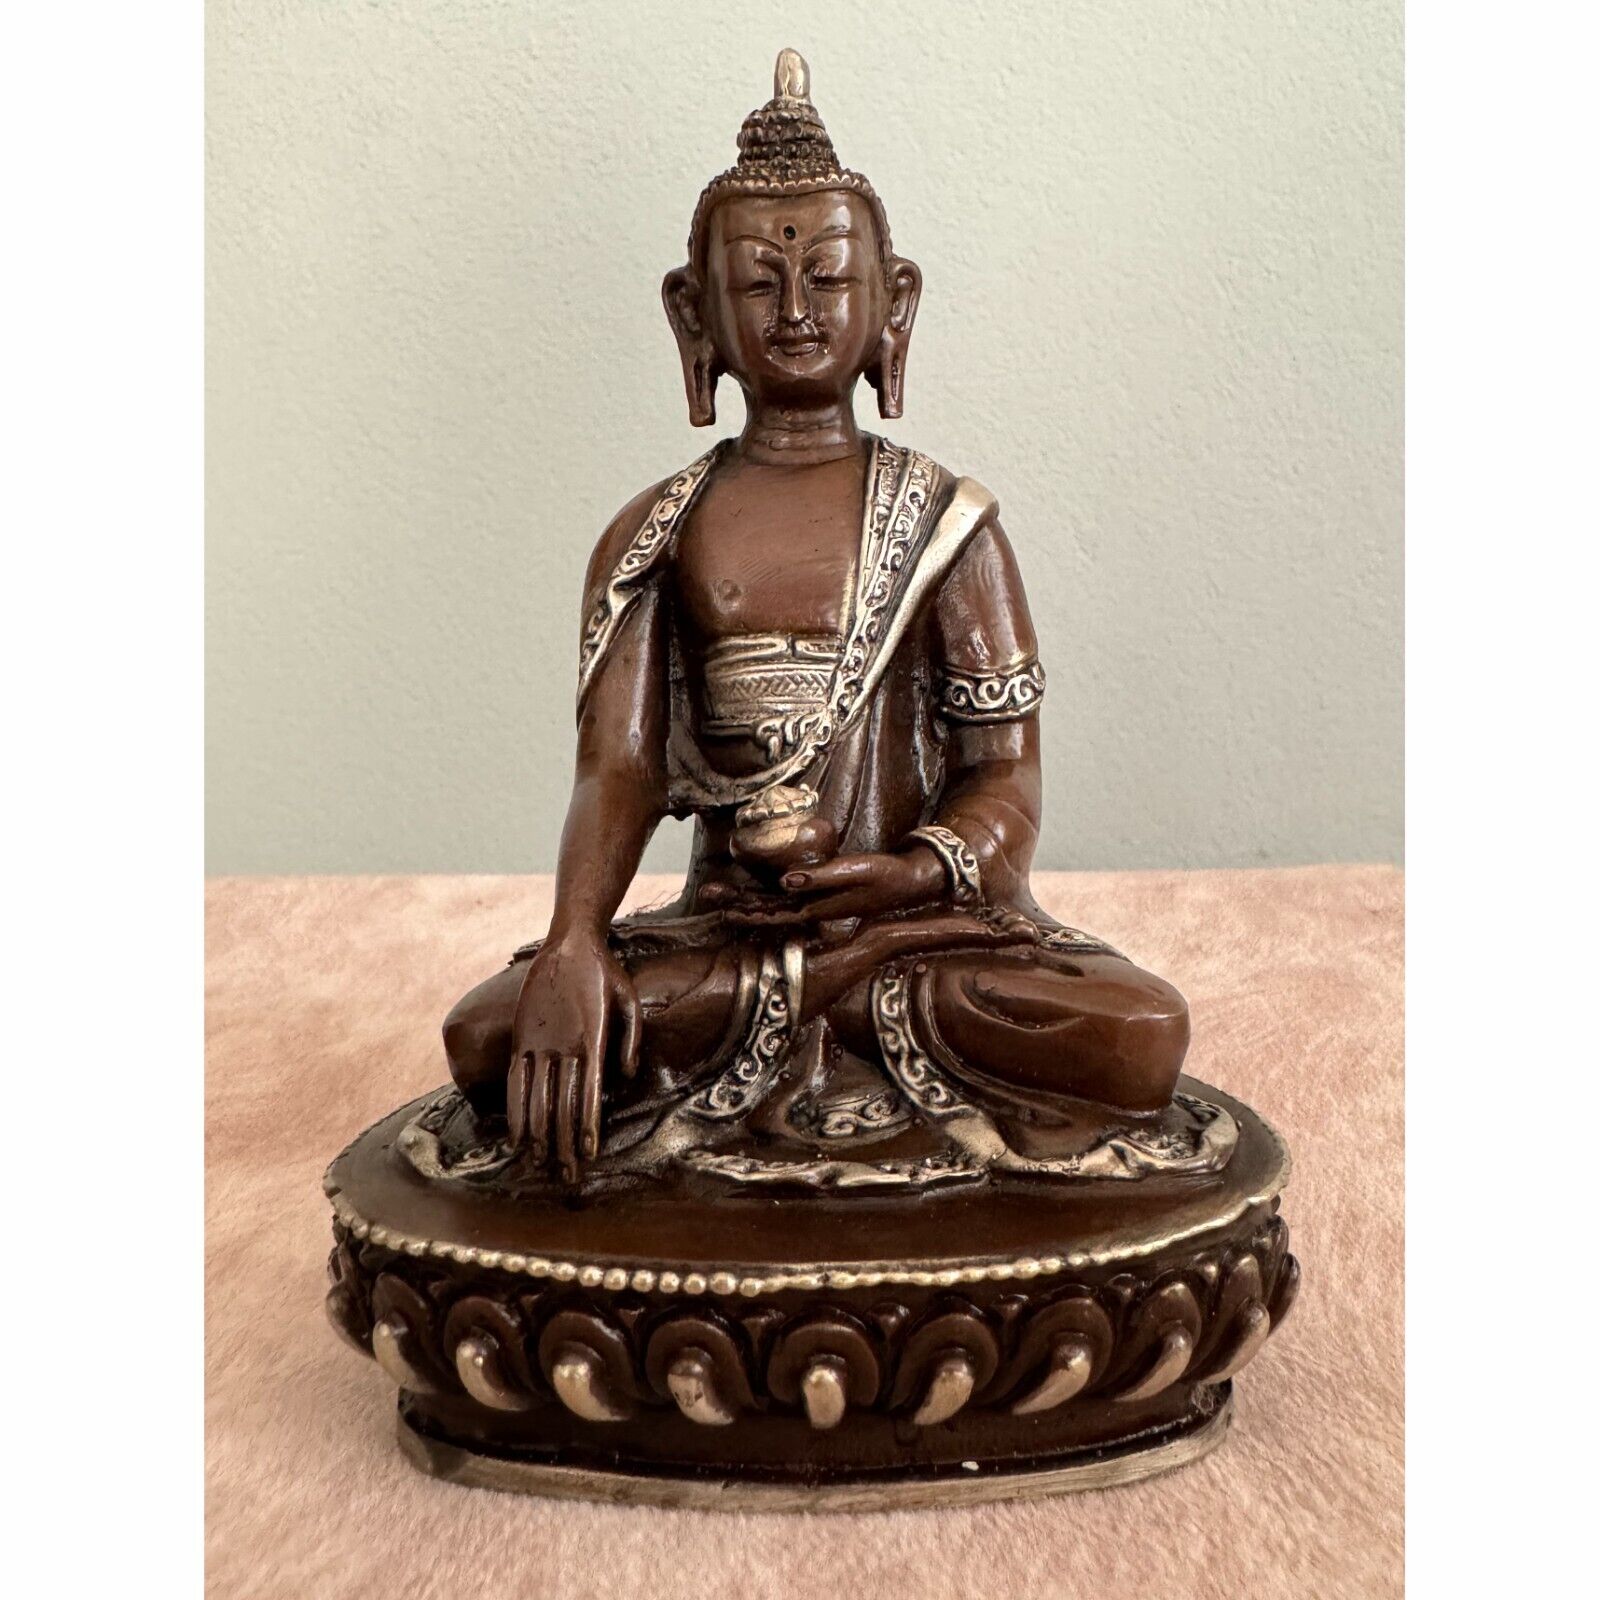 Copper Buddha Statue, Antique Copper Oxidized Master Quality Shakyamuni Buddha